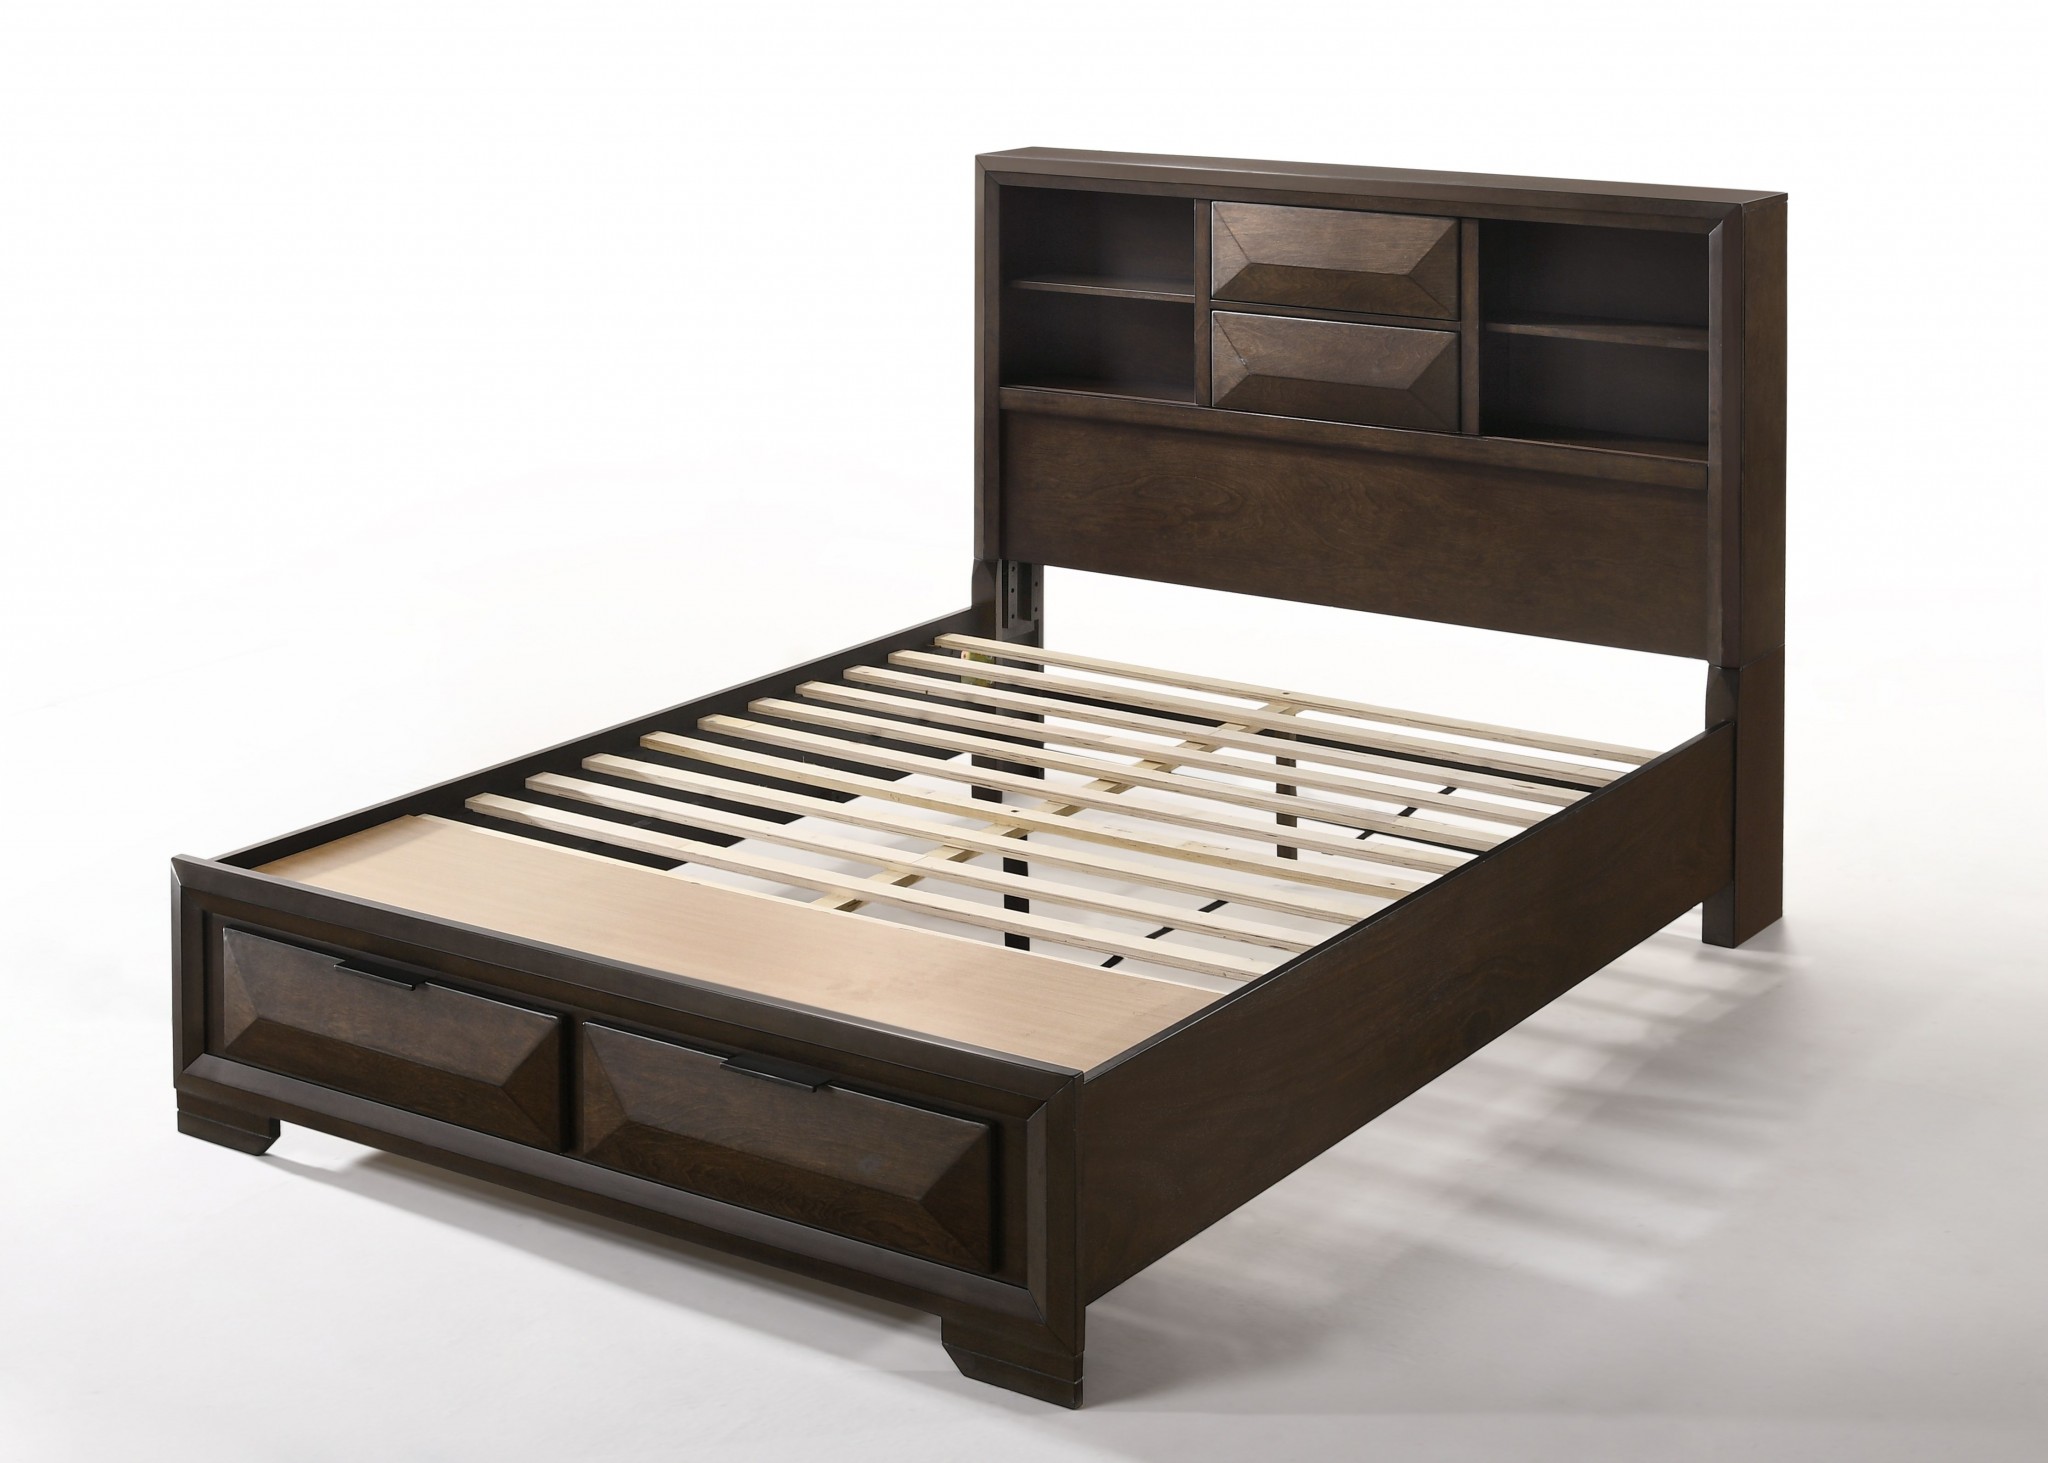 91" X 63" X 53" Espresso Rubber Wood Queen Storage Bed